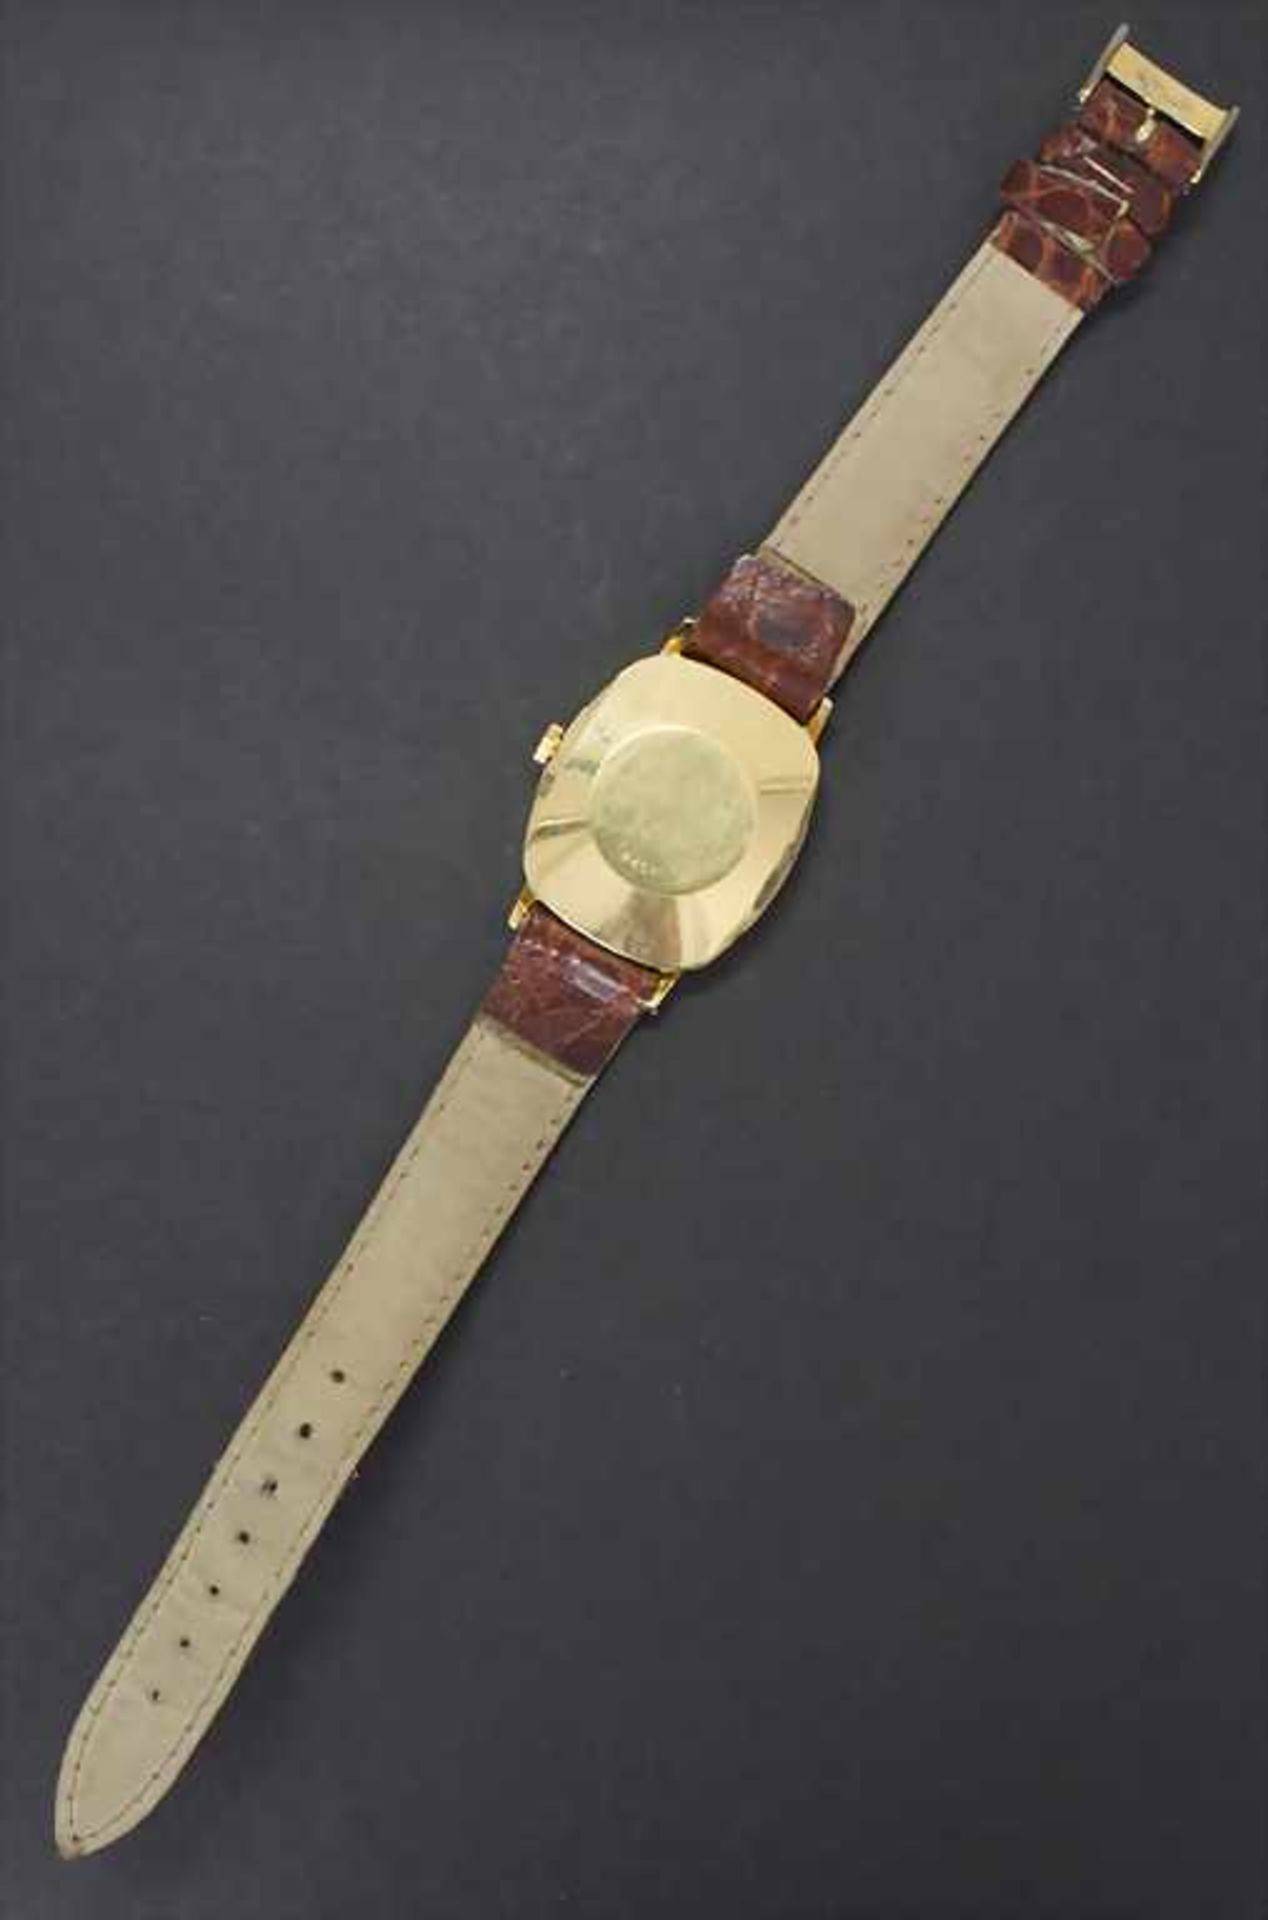 Herrenarmbanduhr mit Kalender / A men's wrist watch, Le Phare, Schweiz, um 2000 - Image 5 of 5